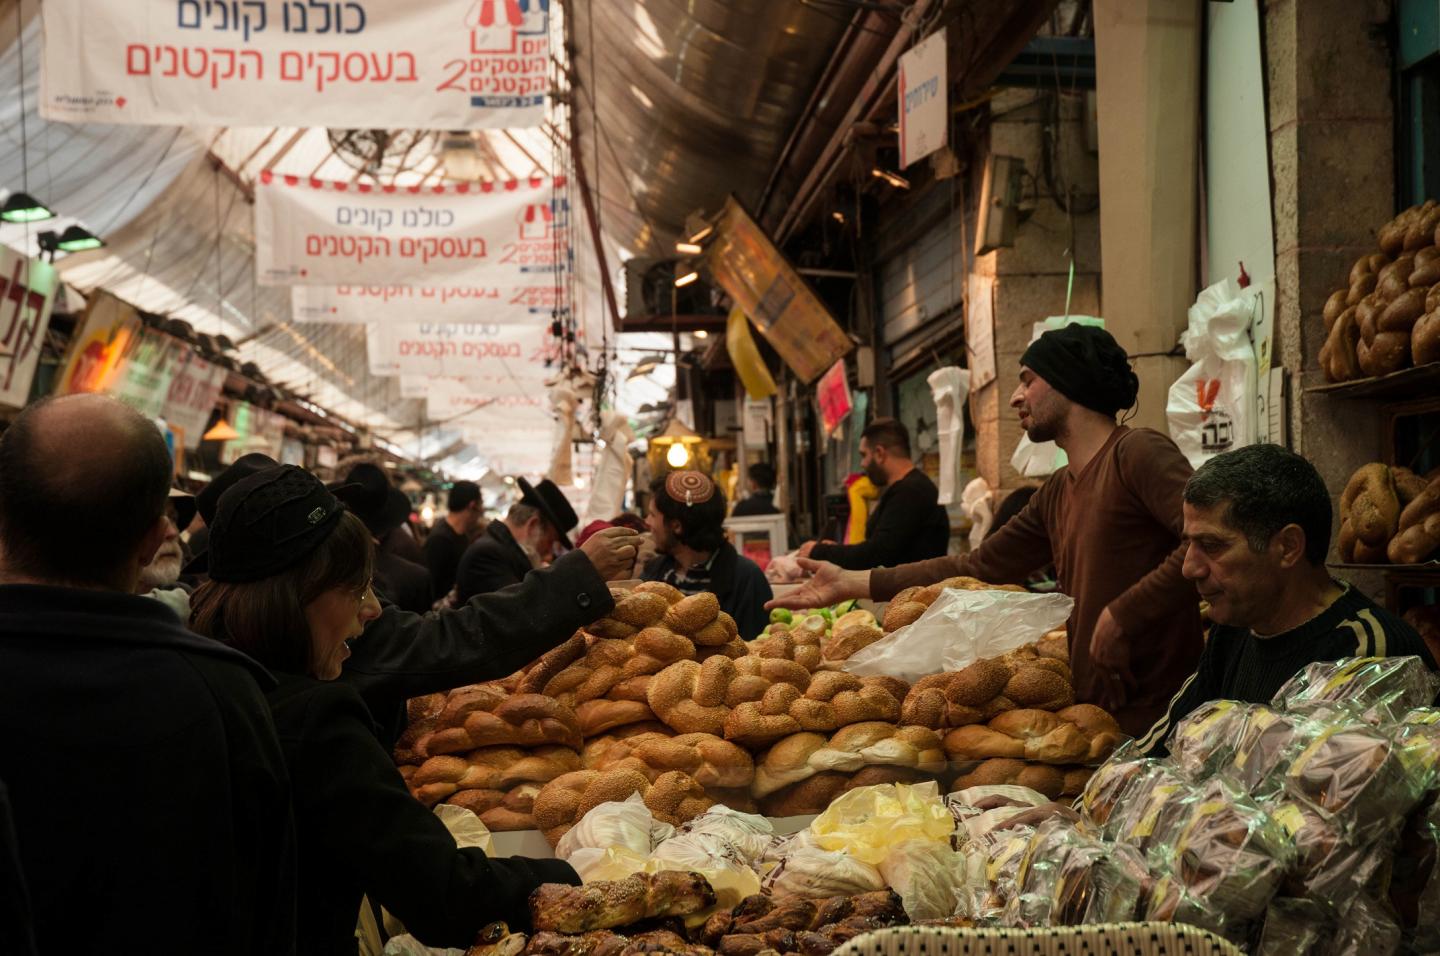 Jeruzalem Mahane Yehuda market